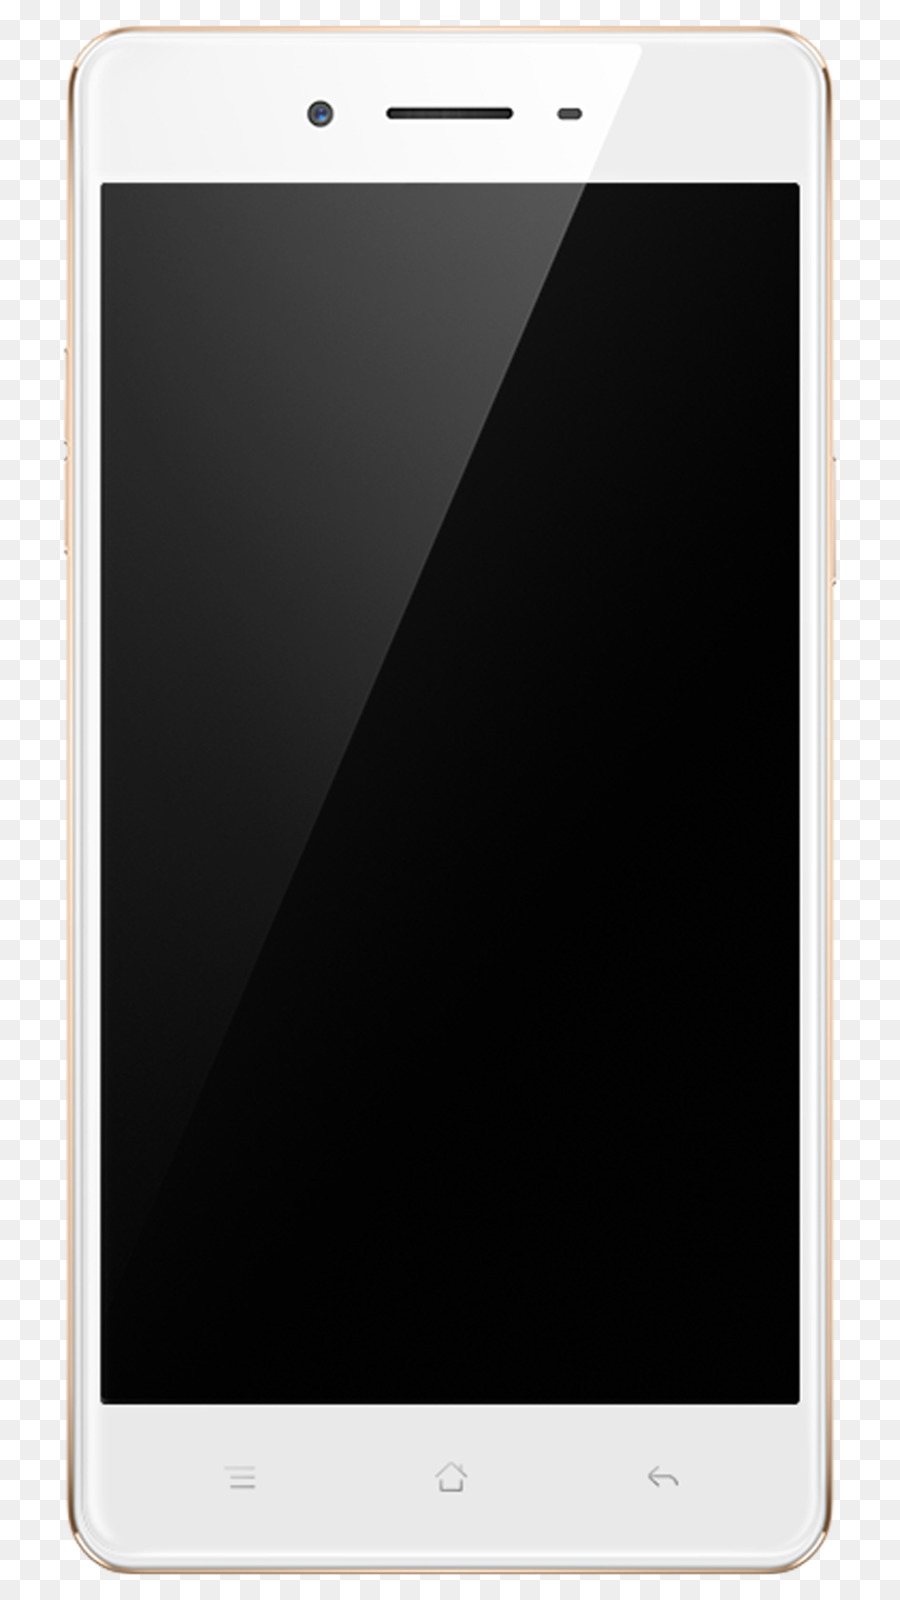 Smartphone Samsung Galaxy Tab 3 Lite 7.0 Caratteristica del telefono di Samsung Galaxy Tab 3 7.0 Android - smartphone